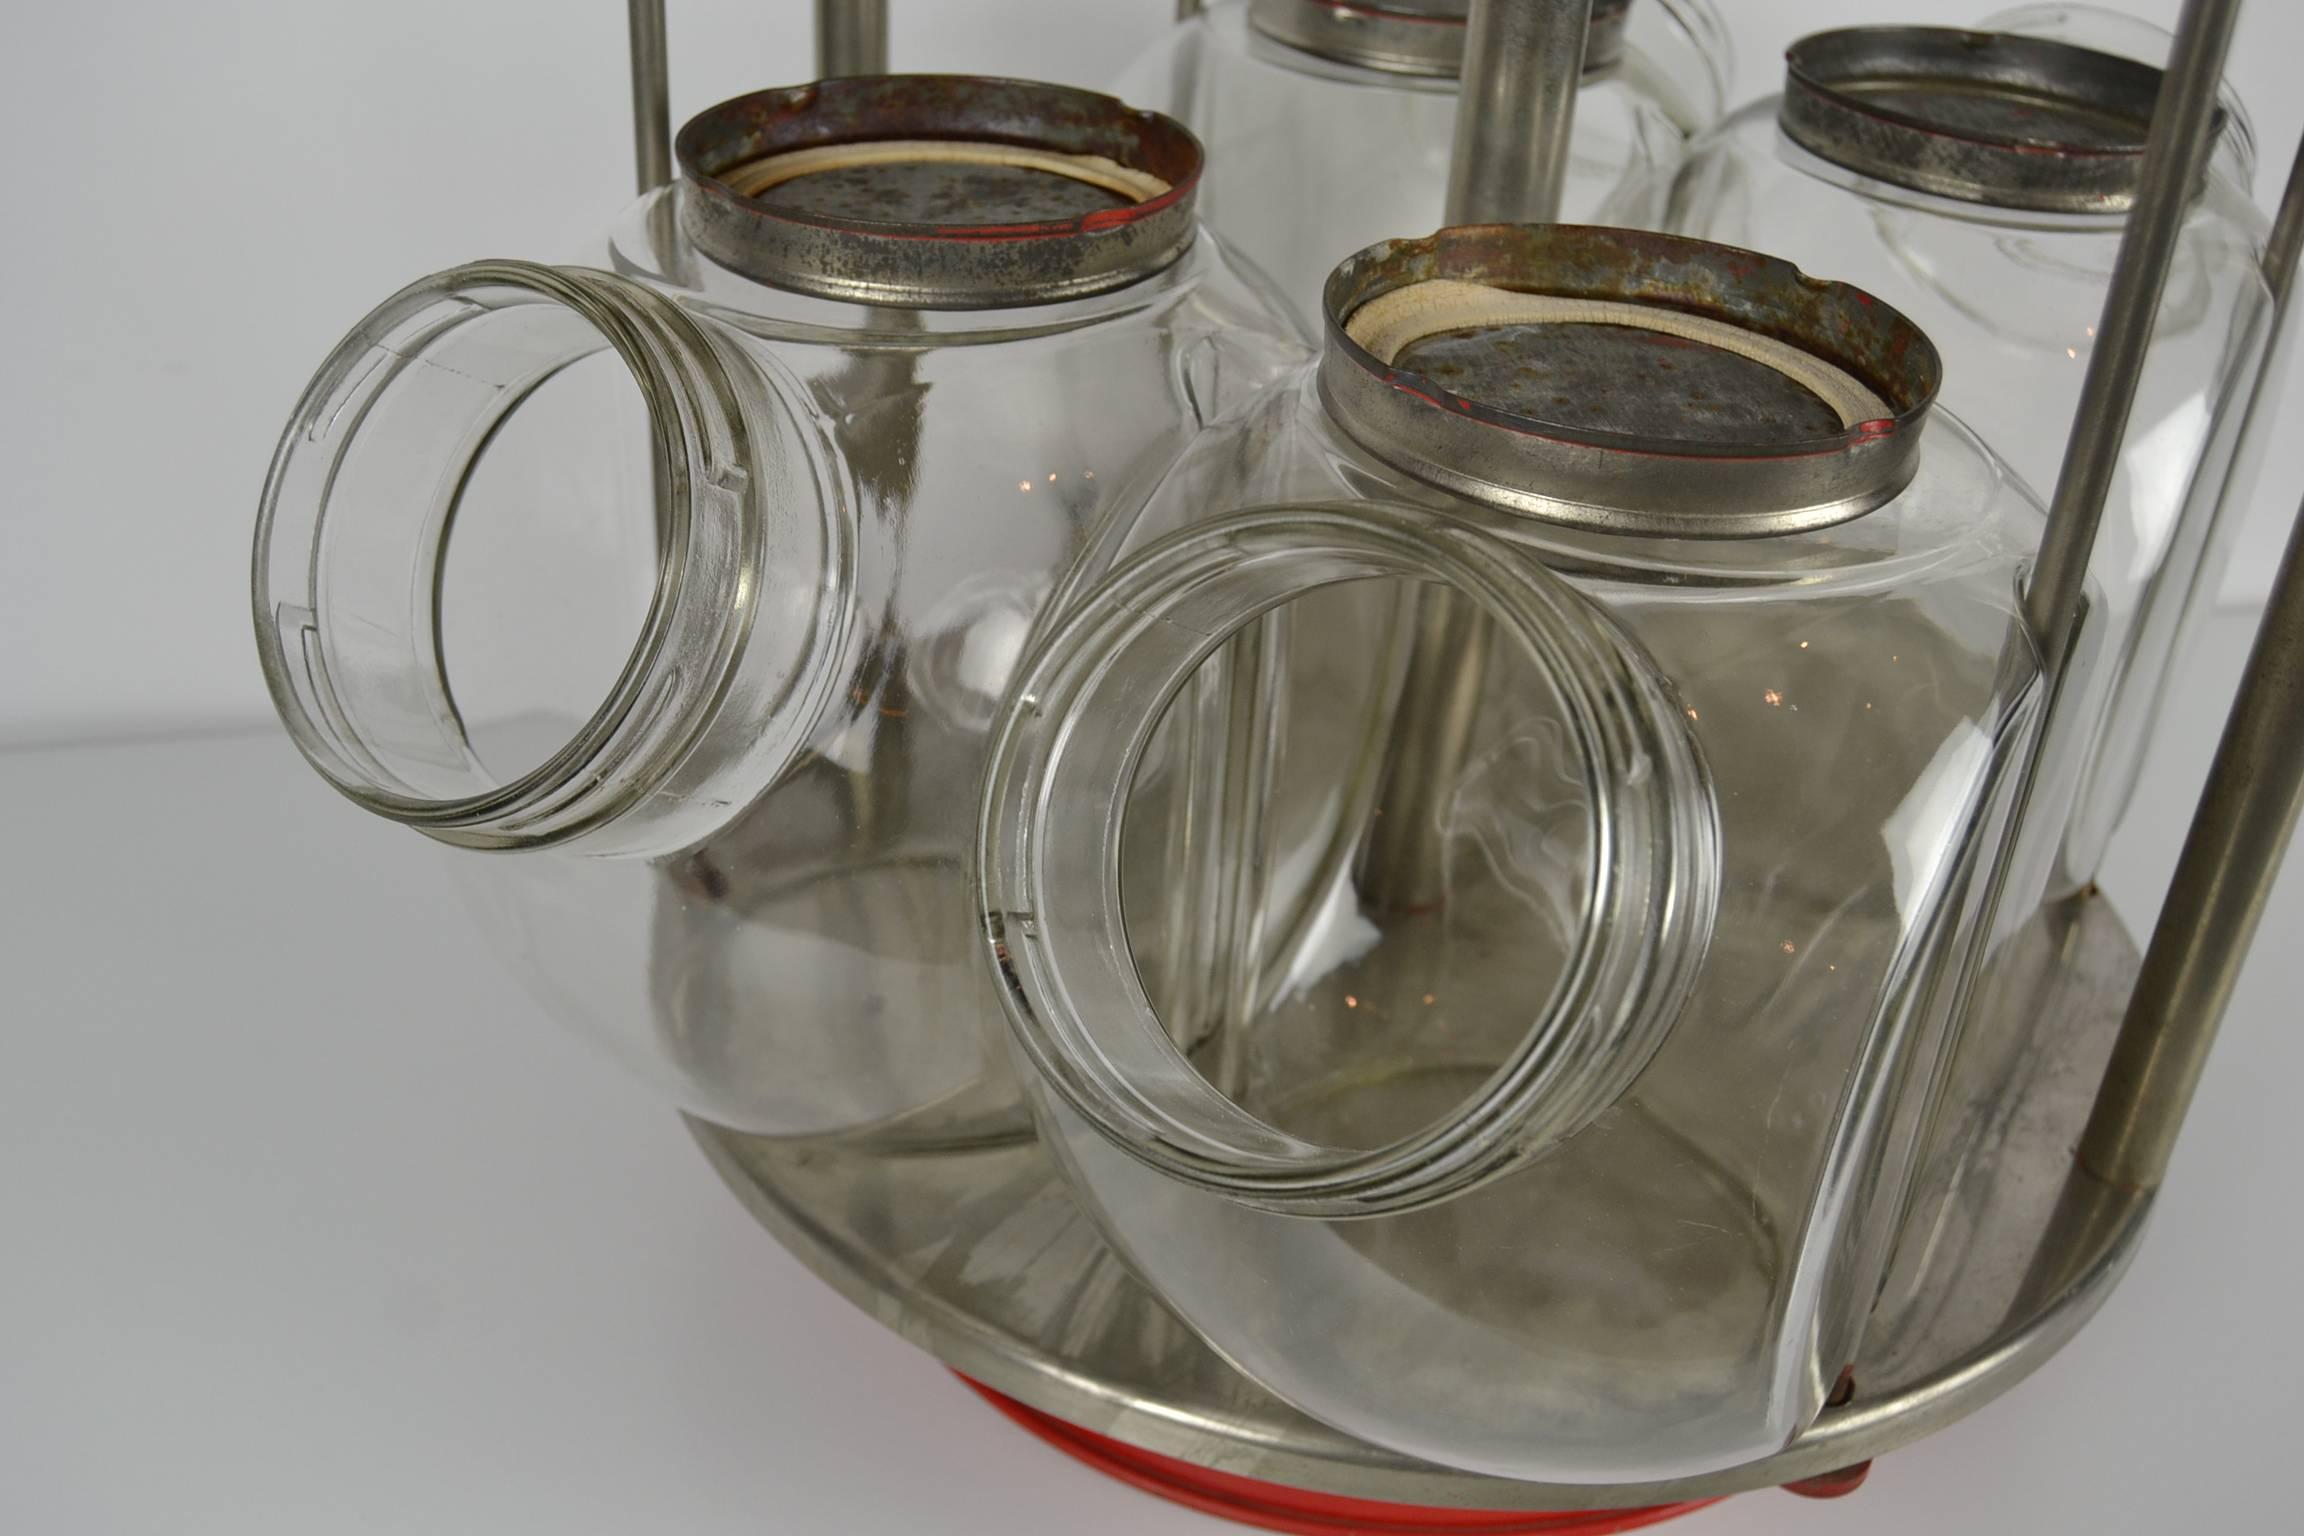 European Vintage Candy Jar Counter Display